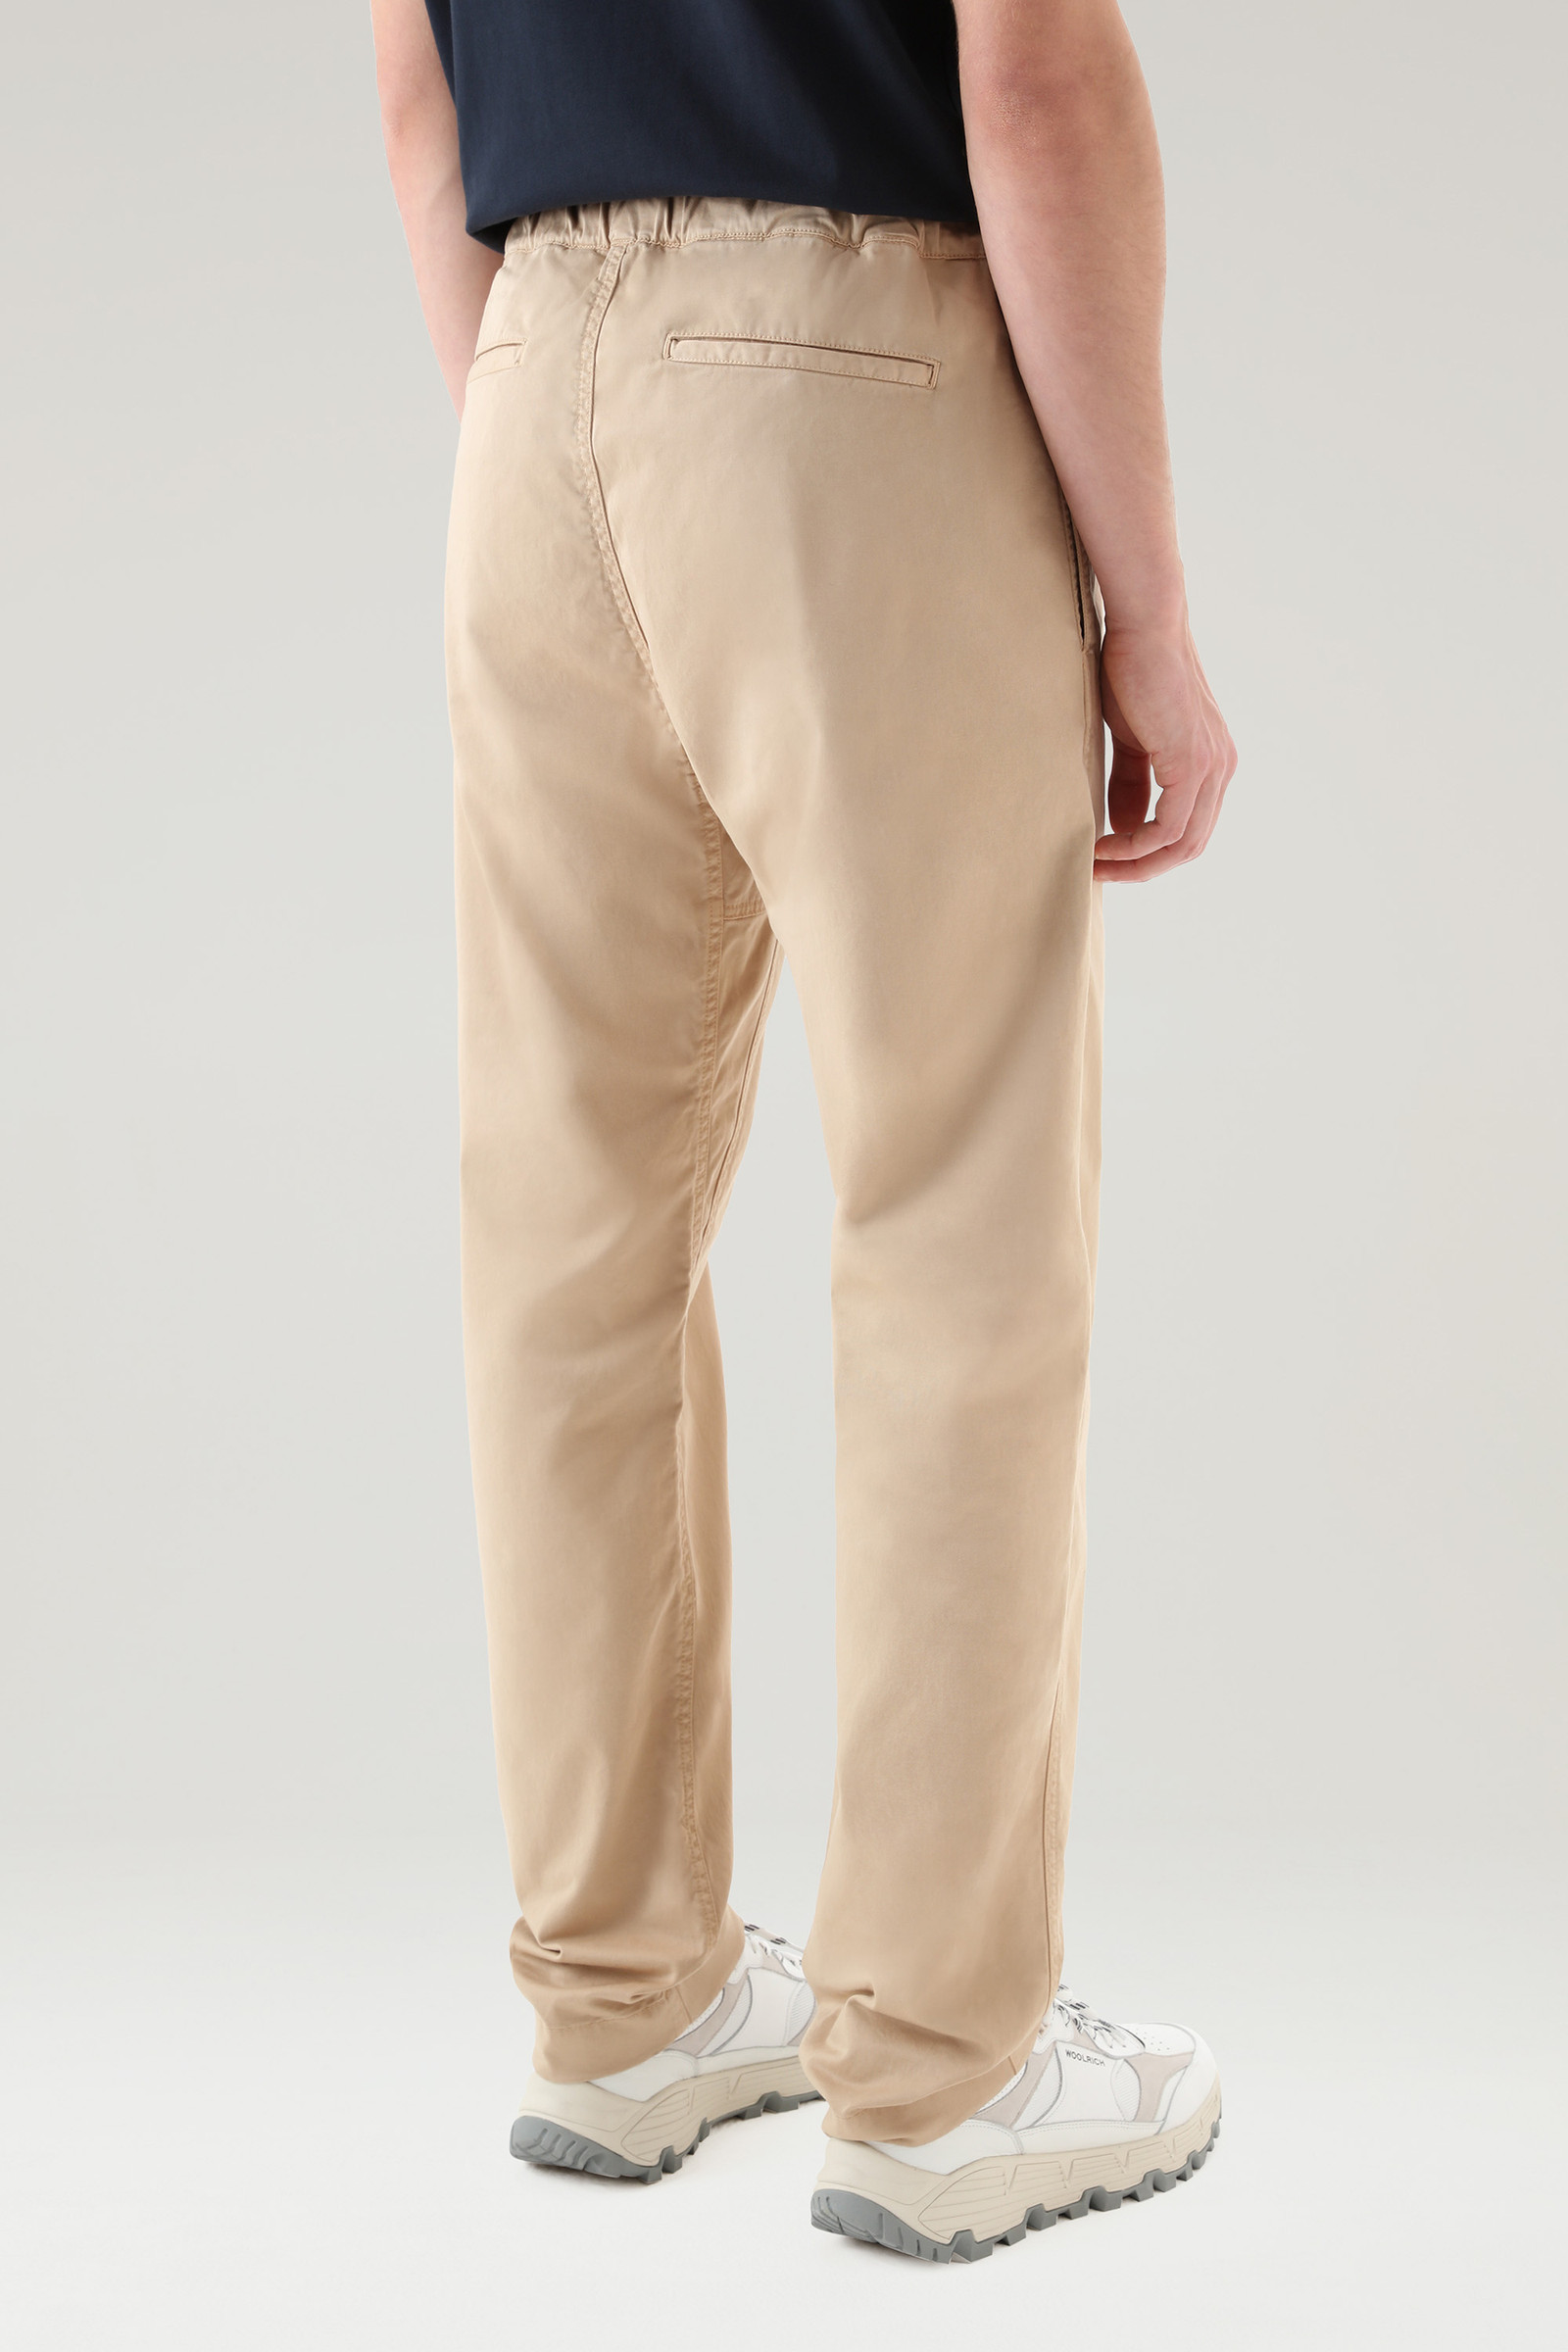 Men's beige cotton chino pants